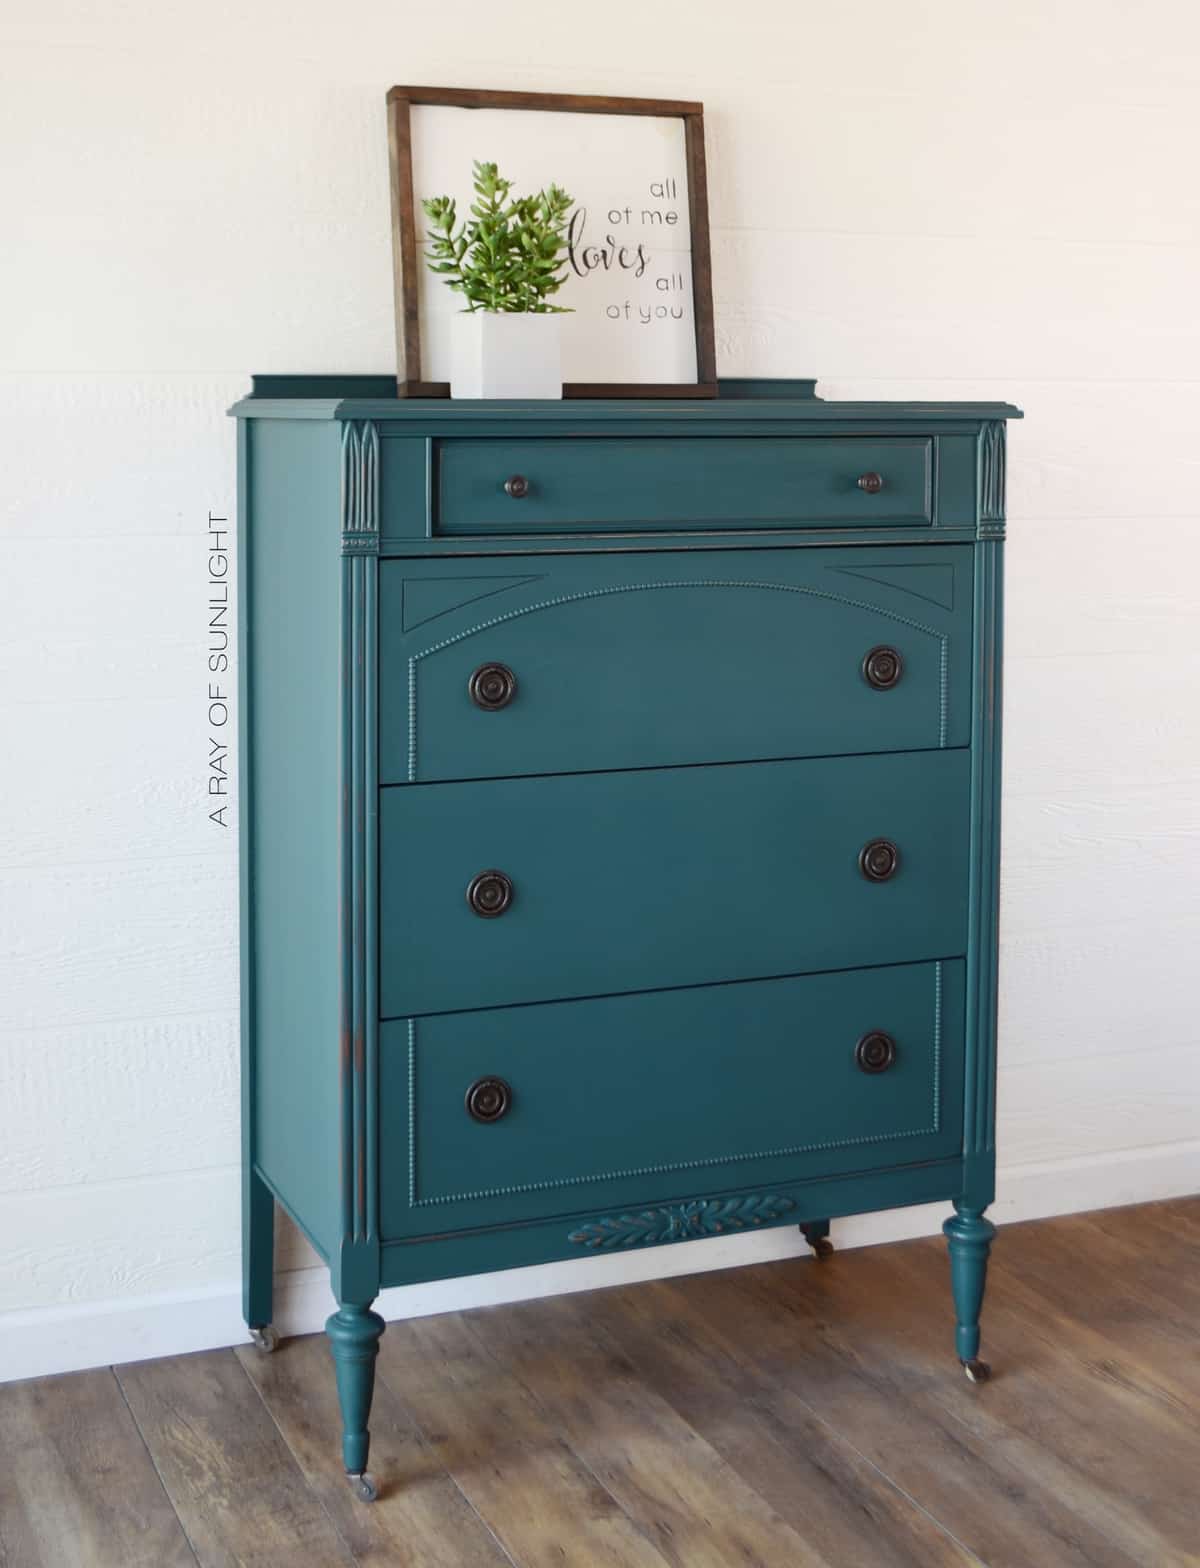 Totally Teal Dresser #DIY #furniturepaint #paintedfurniture #chalkpaint #teal #homedecor #dresser #bedroom #blue #green #countrychicpaint - blog.countrychicpaint.com